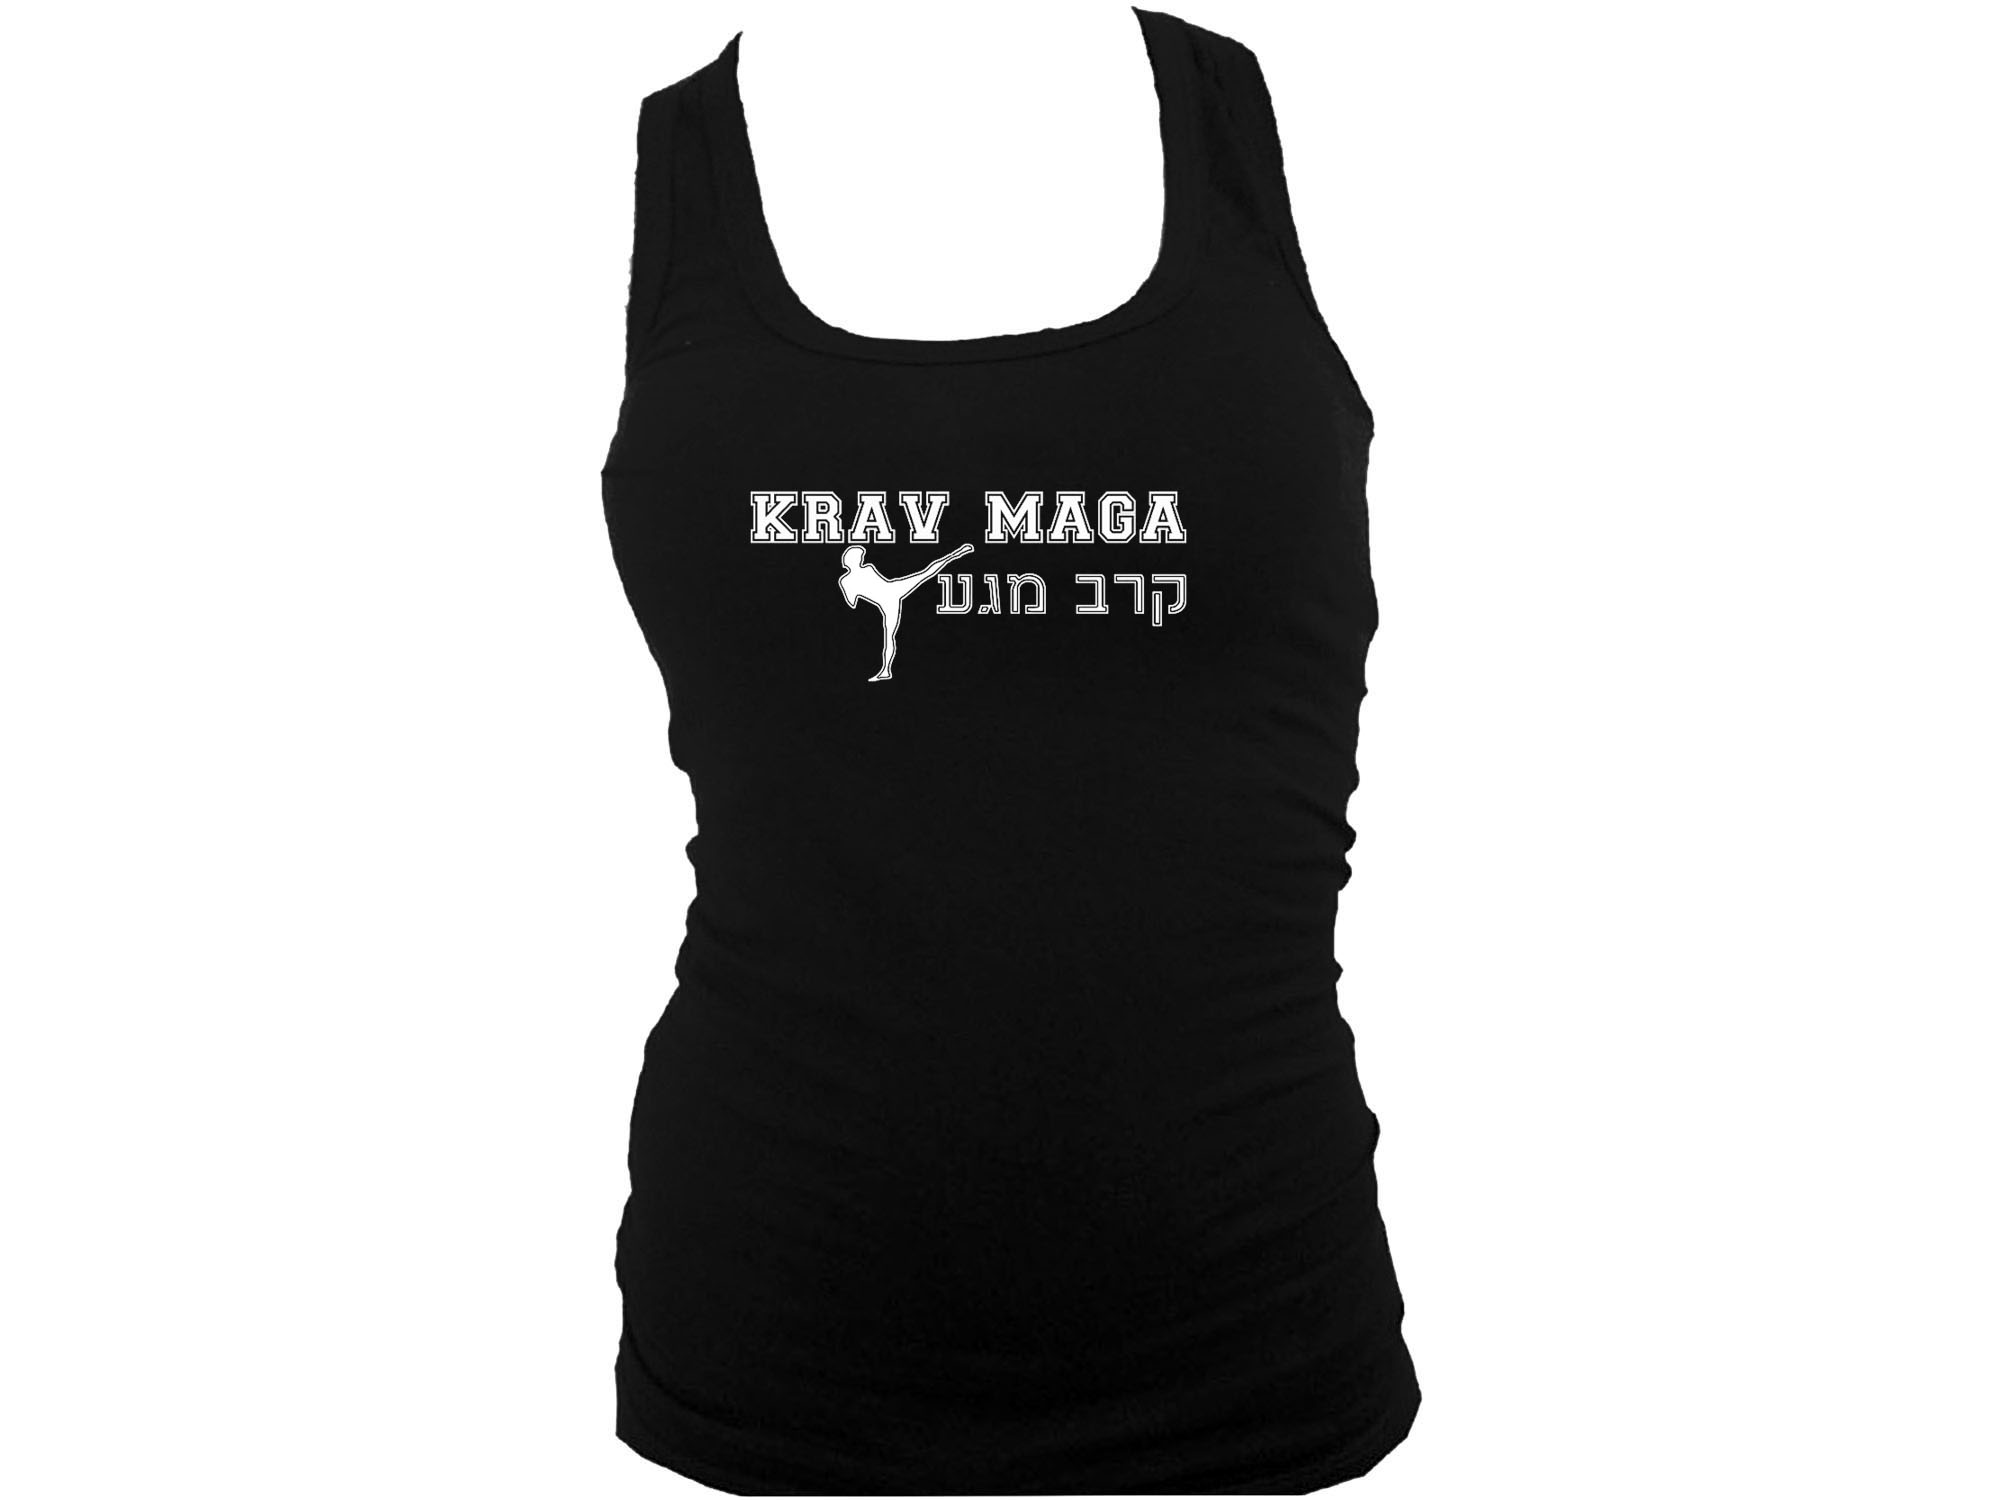 Krav Maga women black tank top L/XL